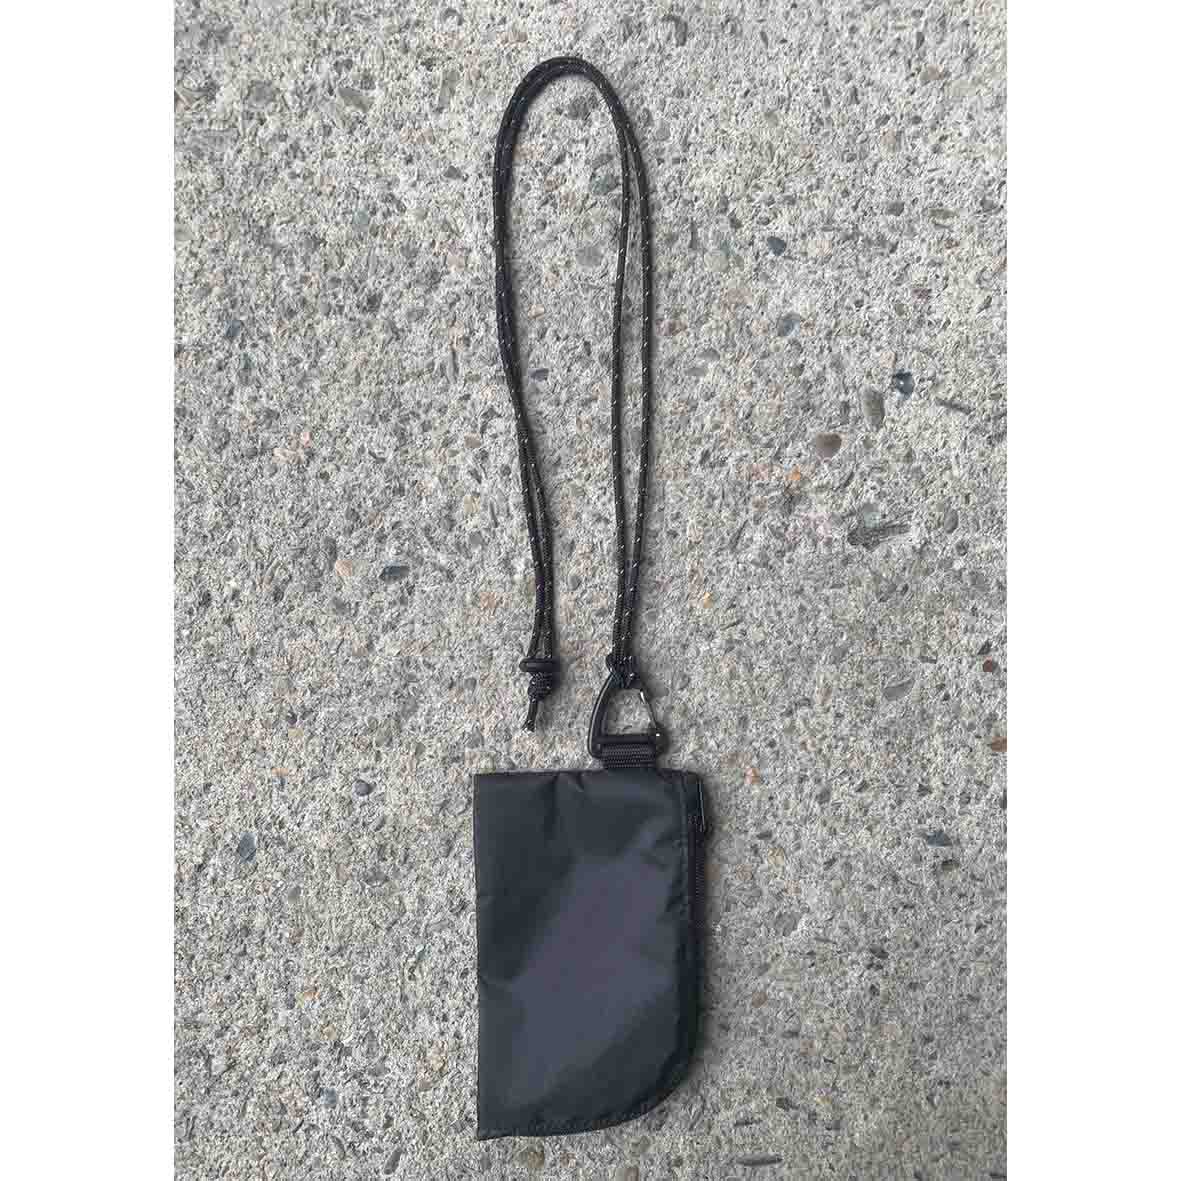 Portable Nylon Wallet (品番CPSEW-010)